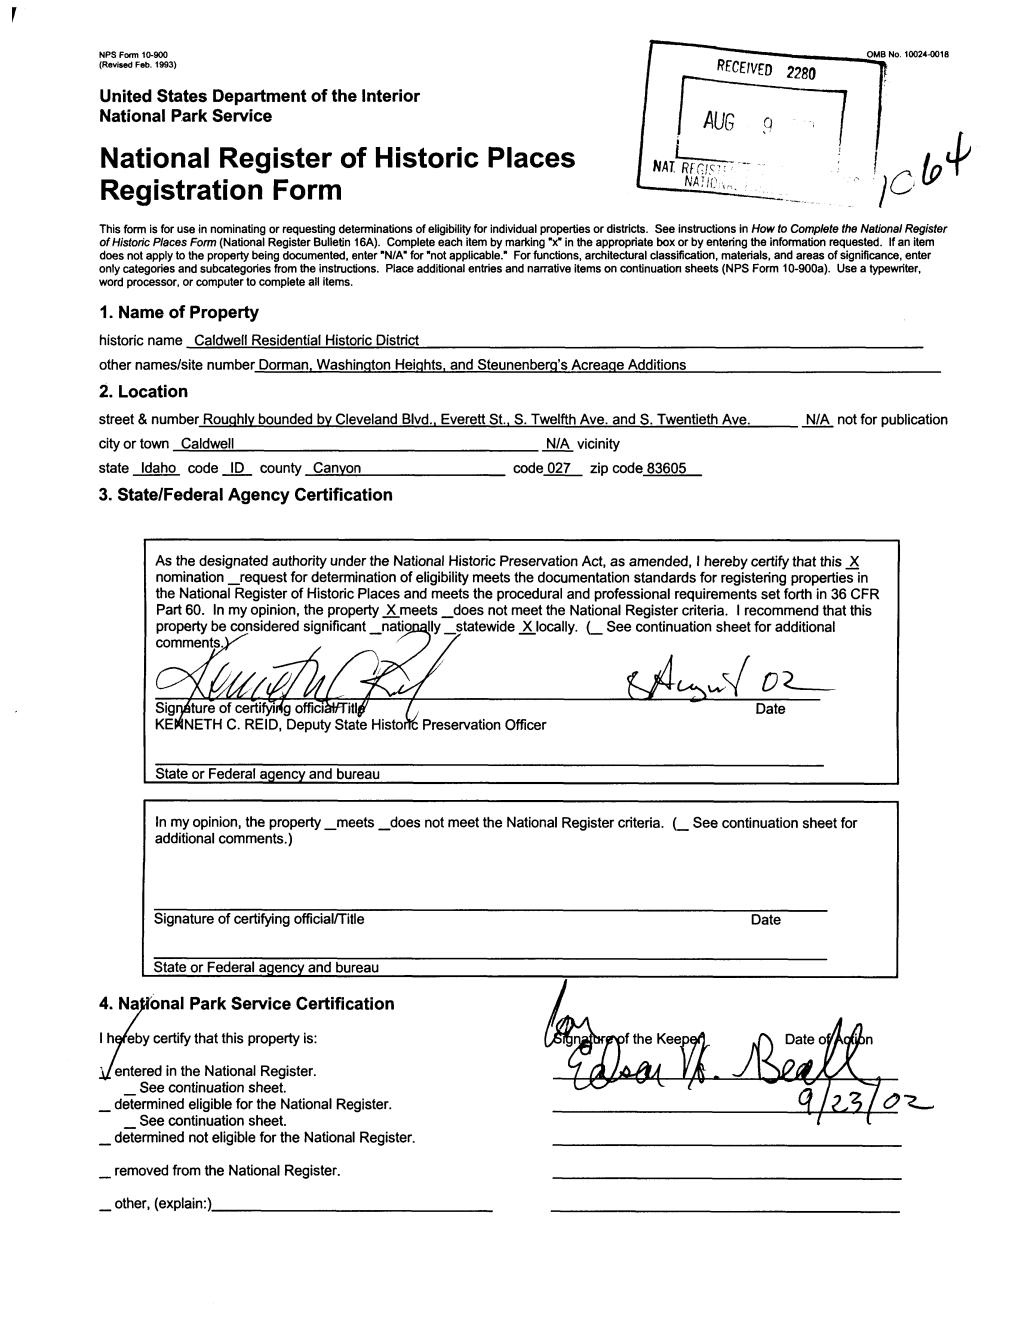 Ce National Register of Historic Places Registration Form